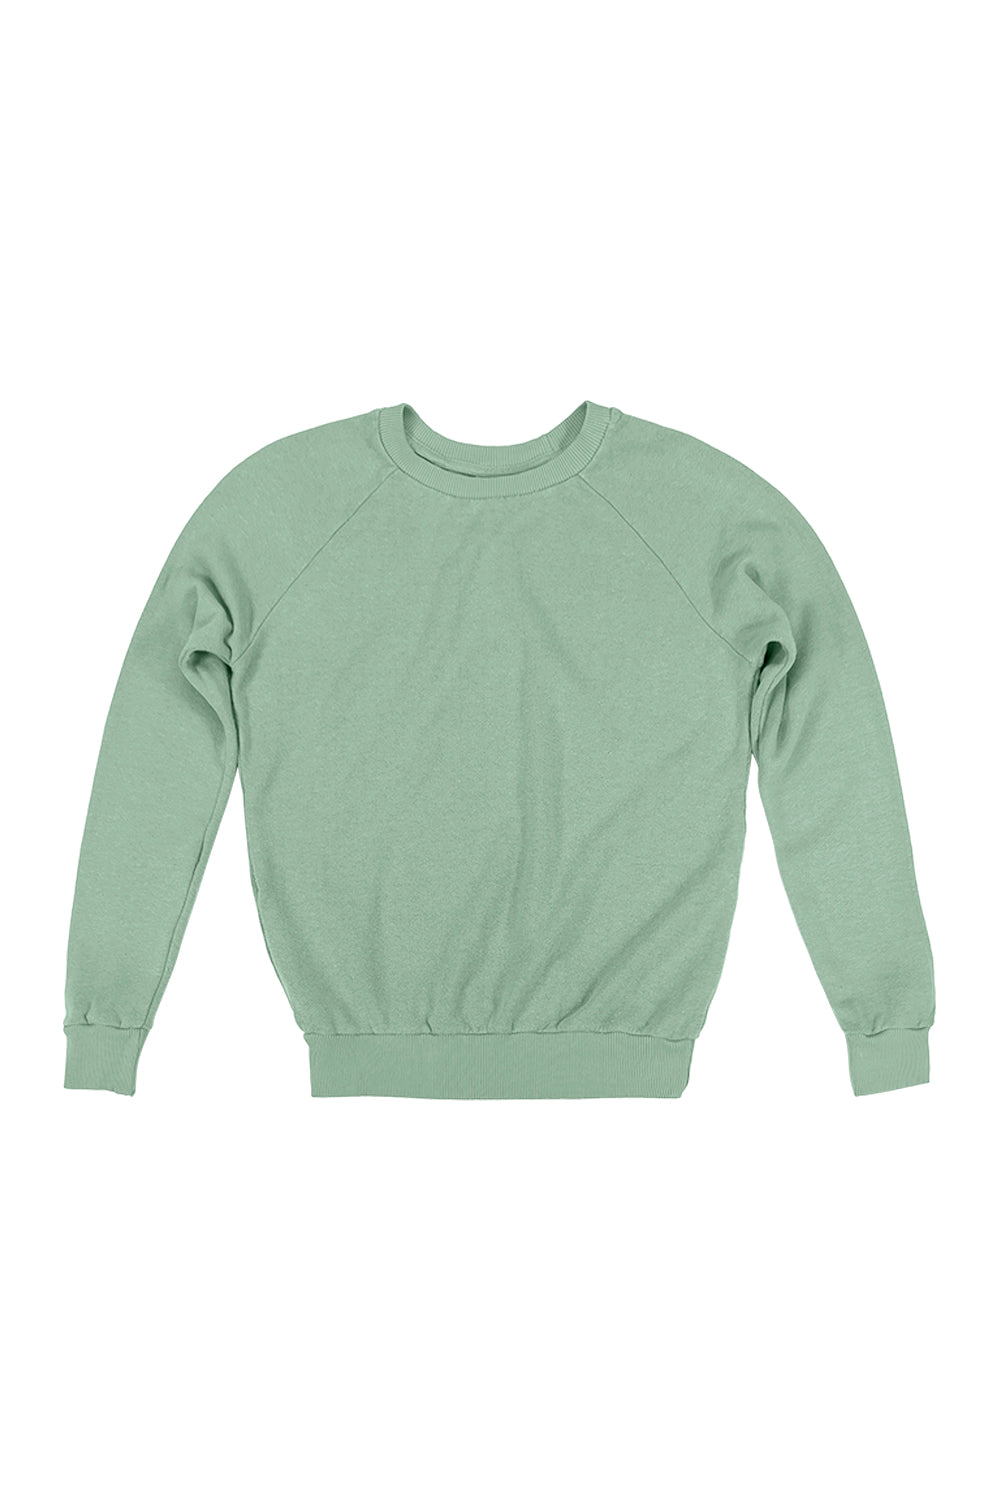 Alpine Raglan | Jungmaven Hemp Clothing & Accessories / Color: Sage Green